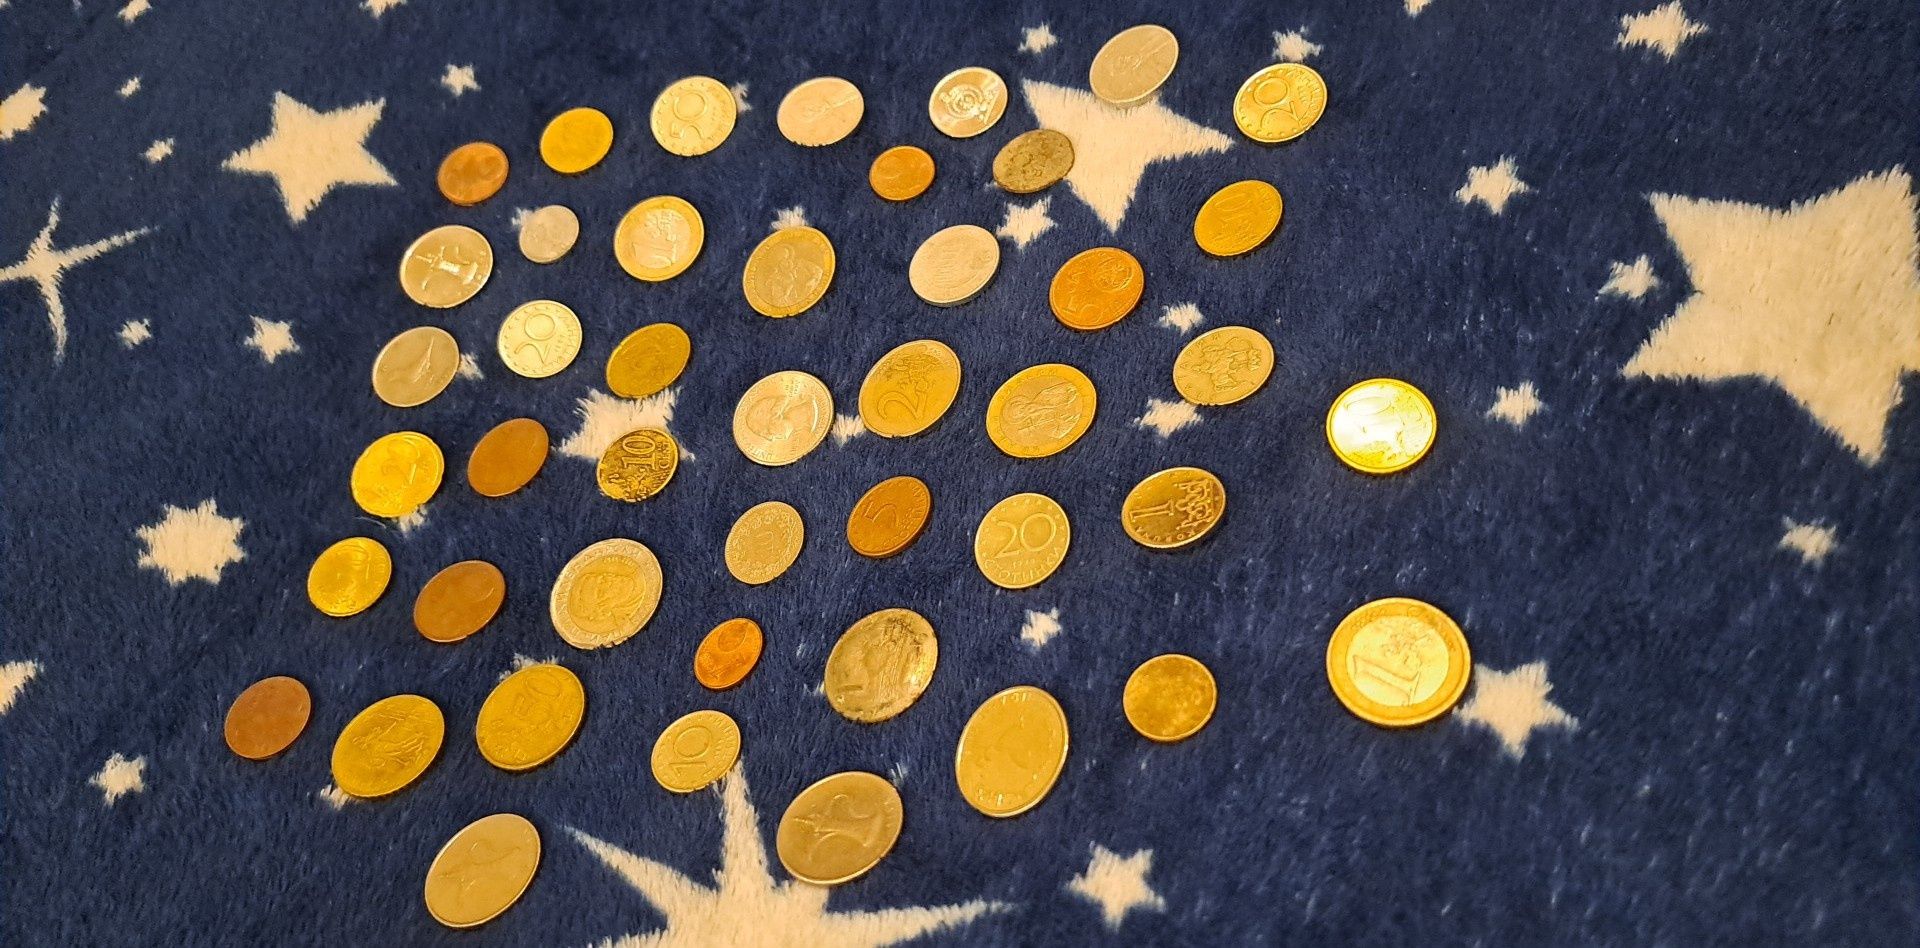 Monede foarte vechi foarte căutate 2000 lei TOT